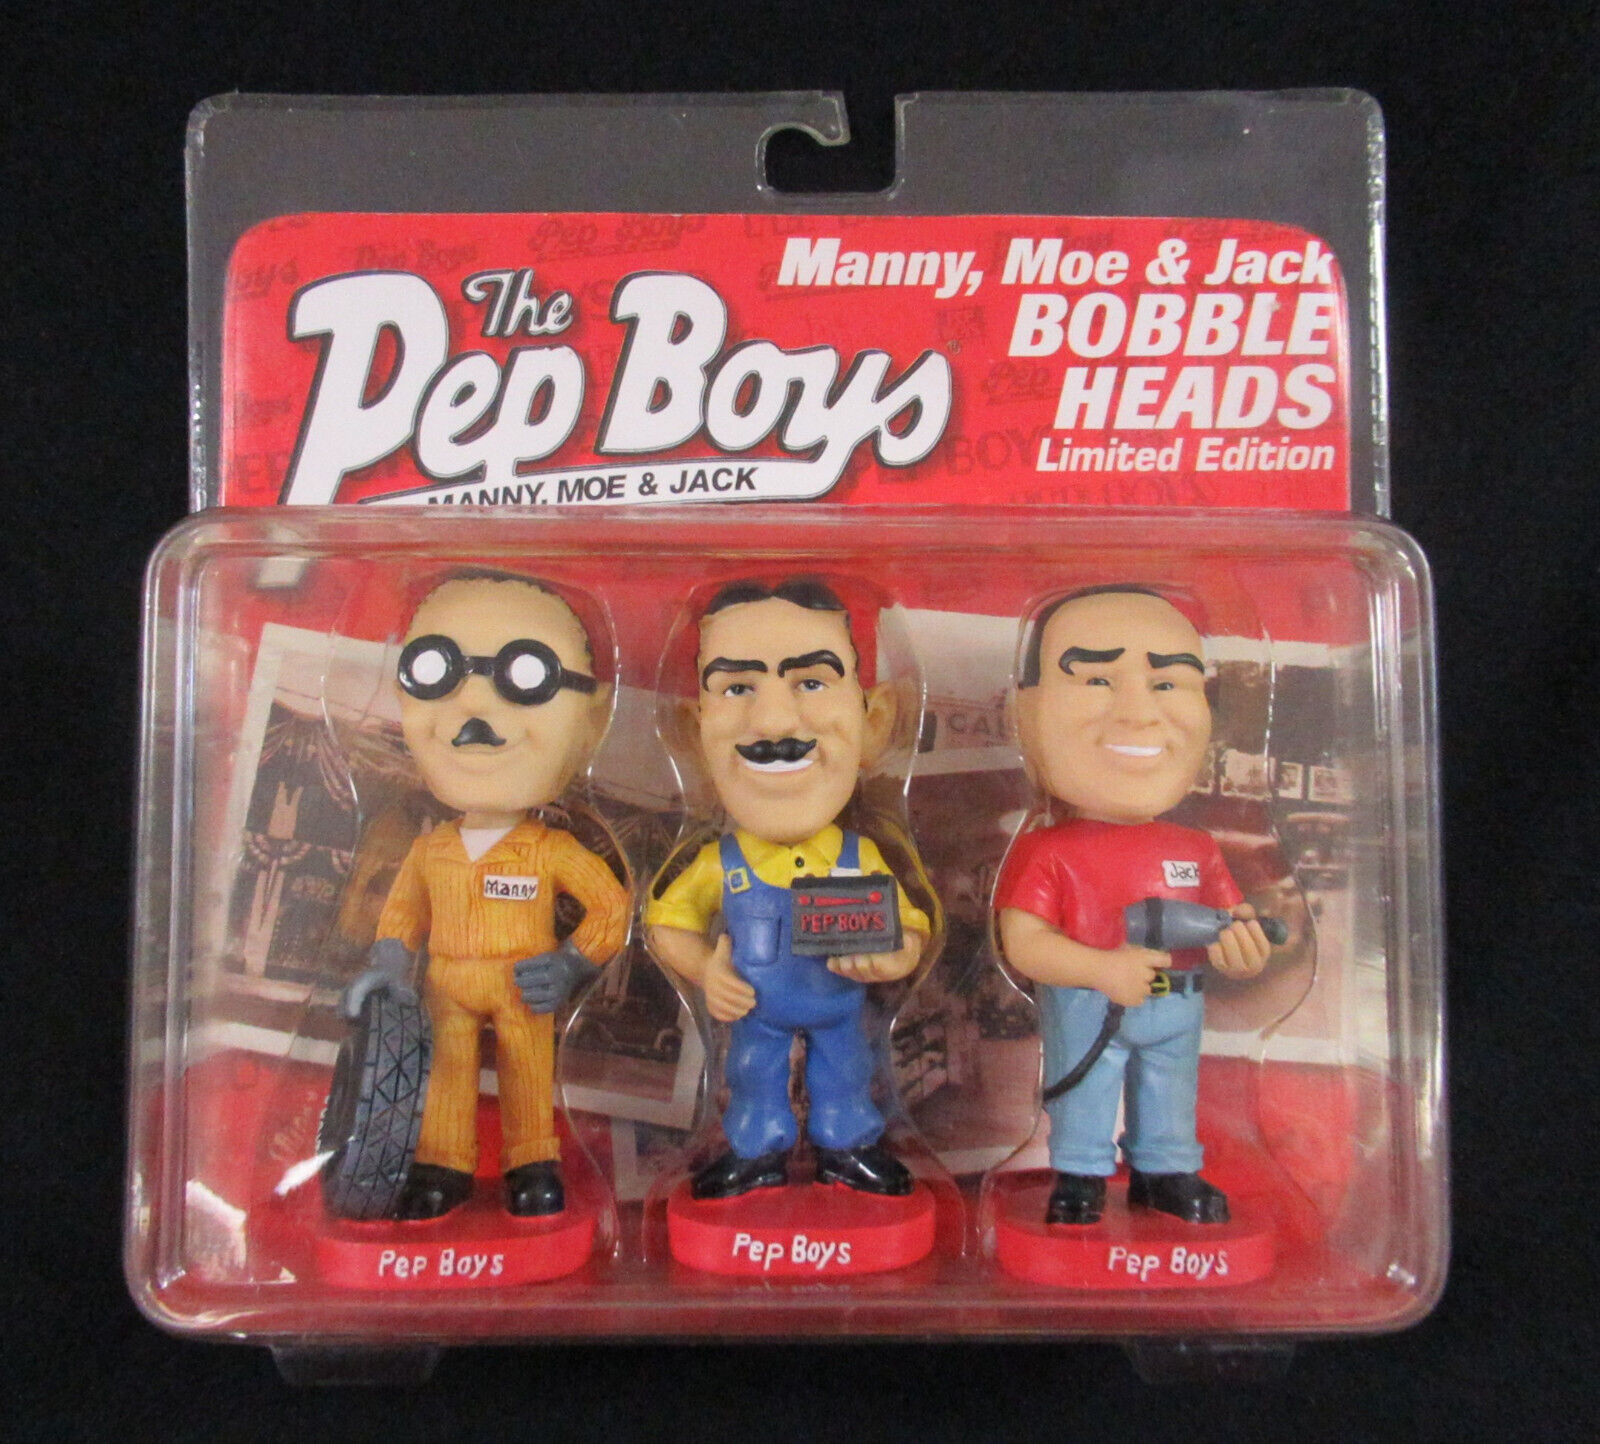 THE PEP BOYS Promotional Set of Company Logo BobbleHead Figures